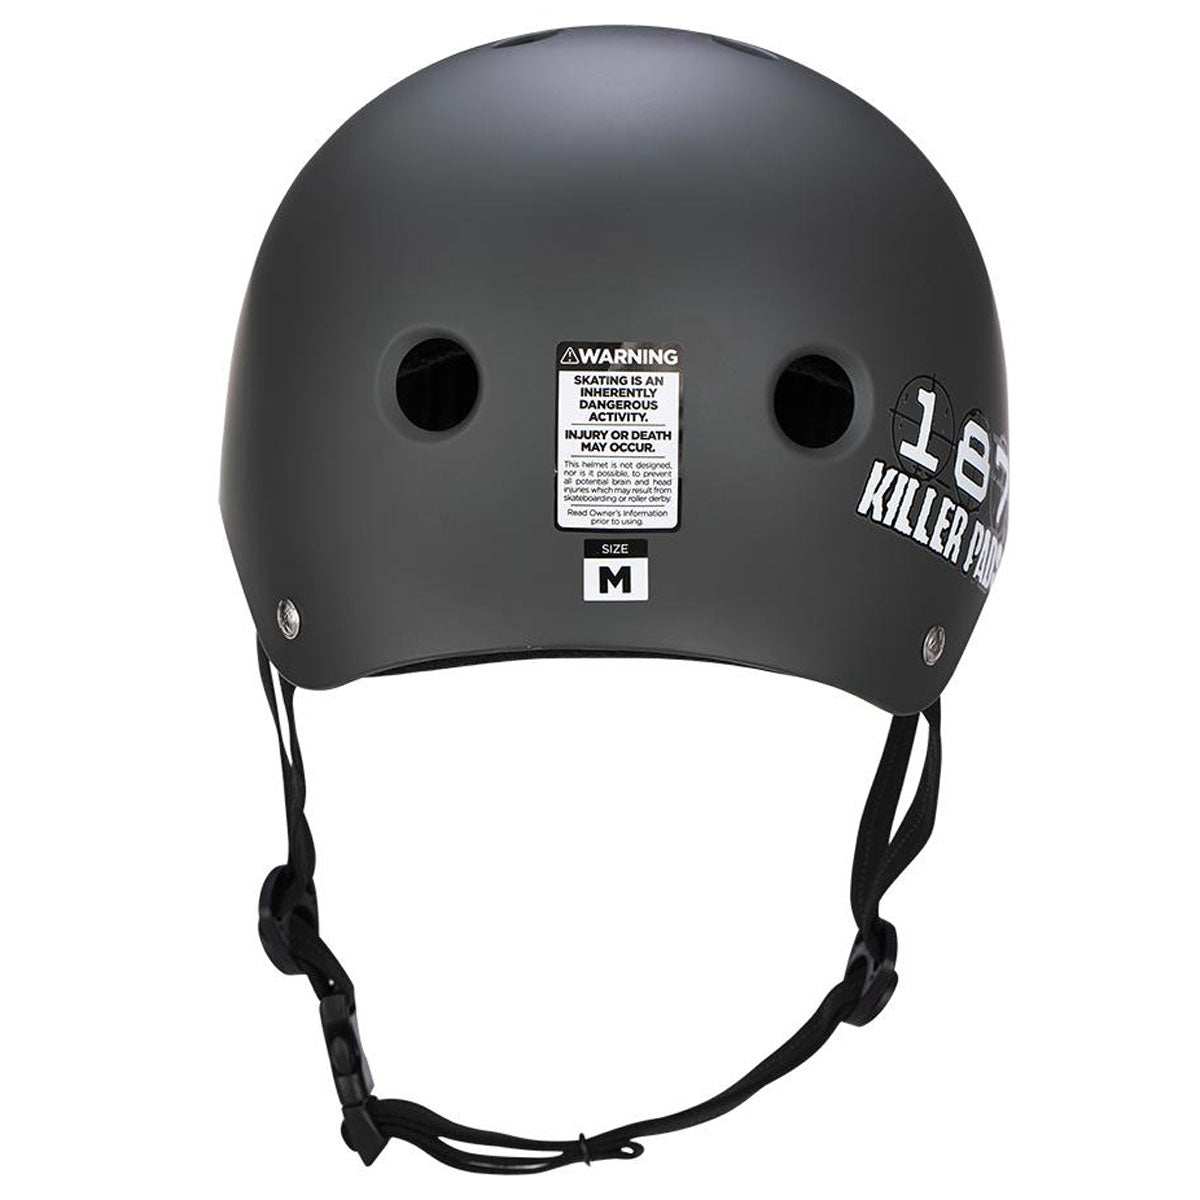 187 Pro Skate With Sweatsaver Liner Helmet - Charcoal Matte image 2